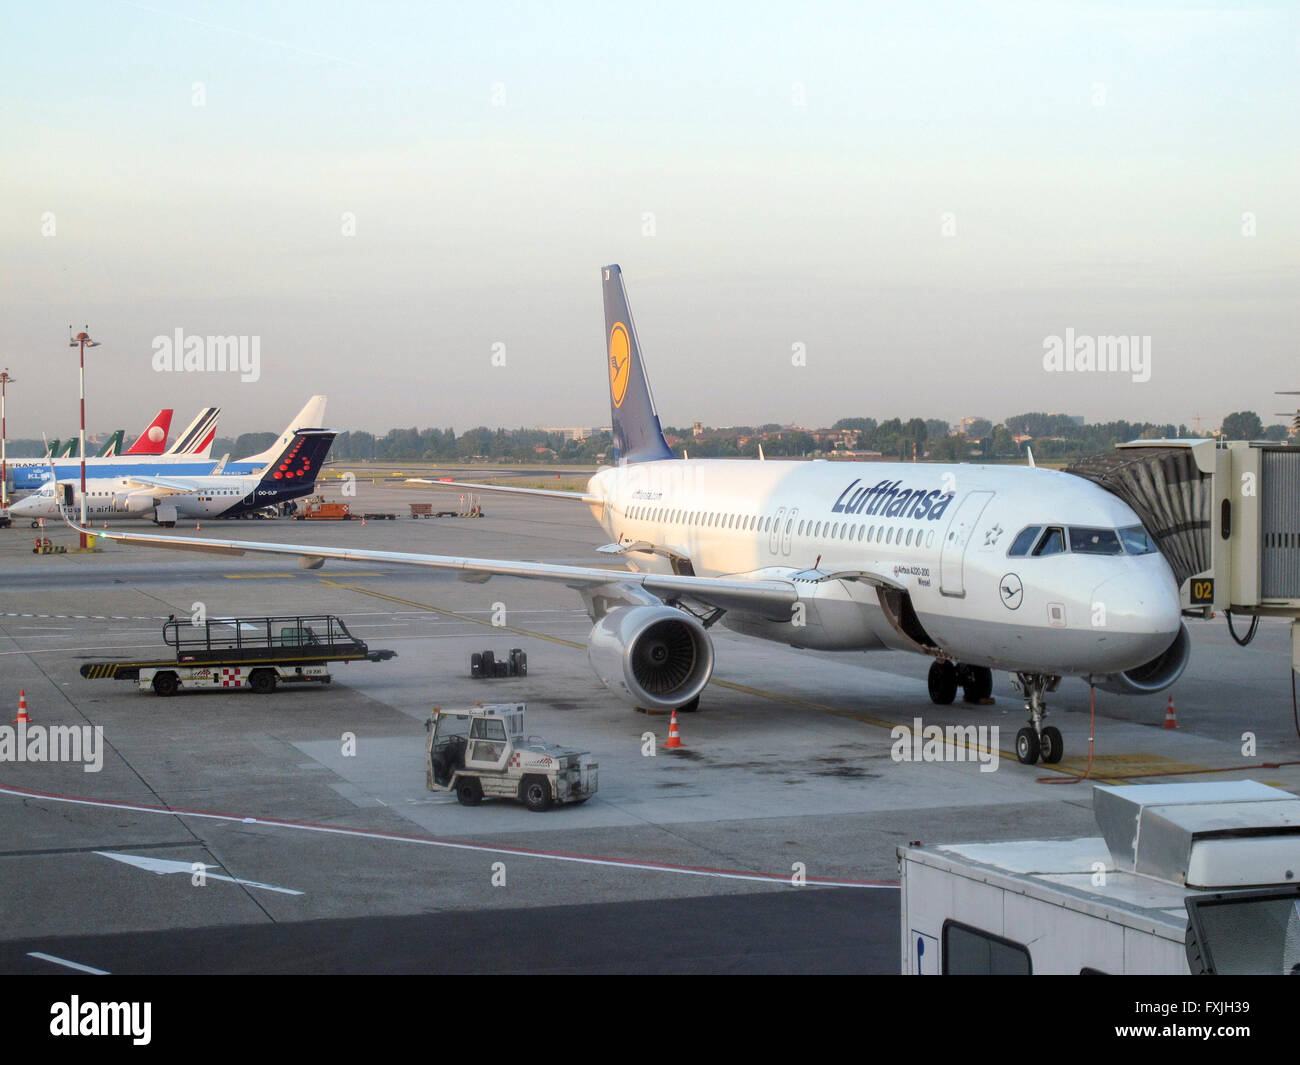 Lufthansa Airbus A320-200 at an airport gate Stock Photo